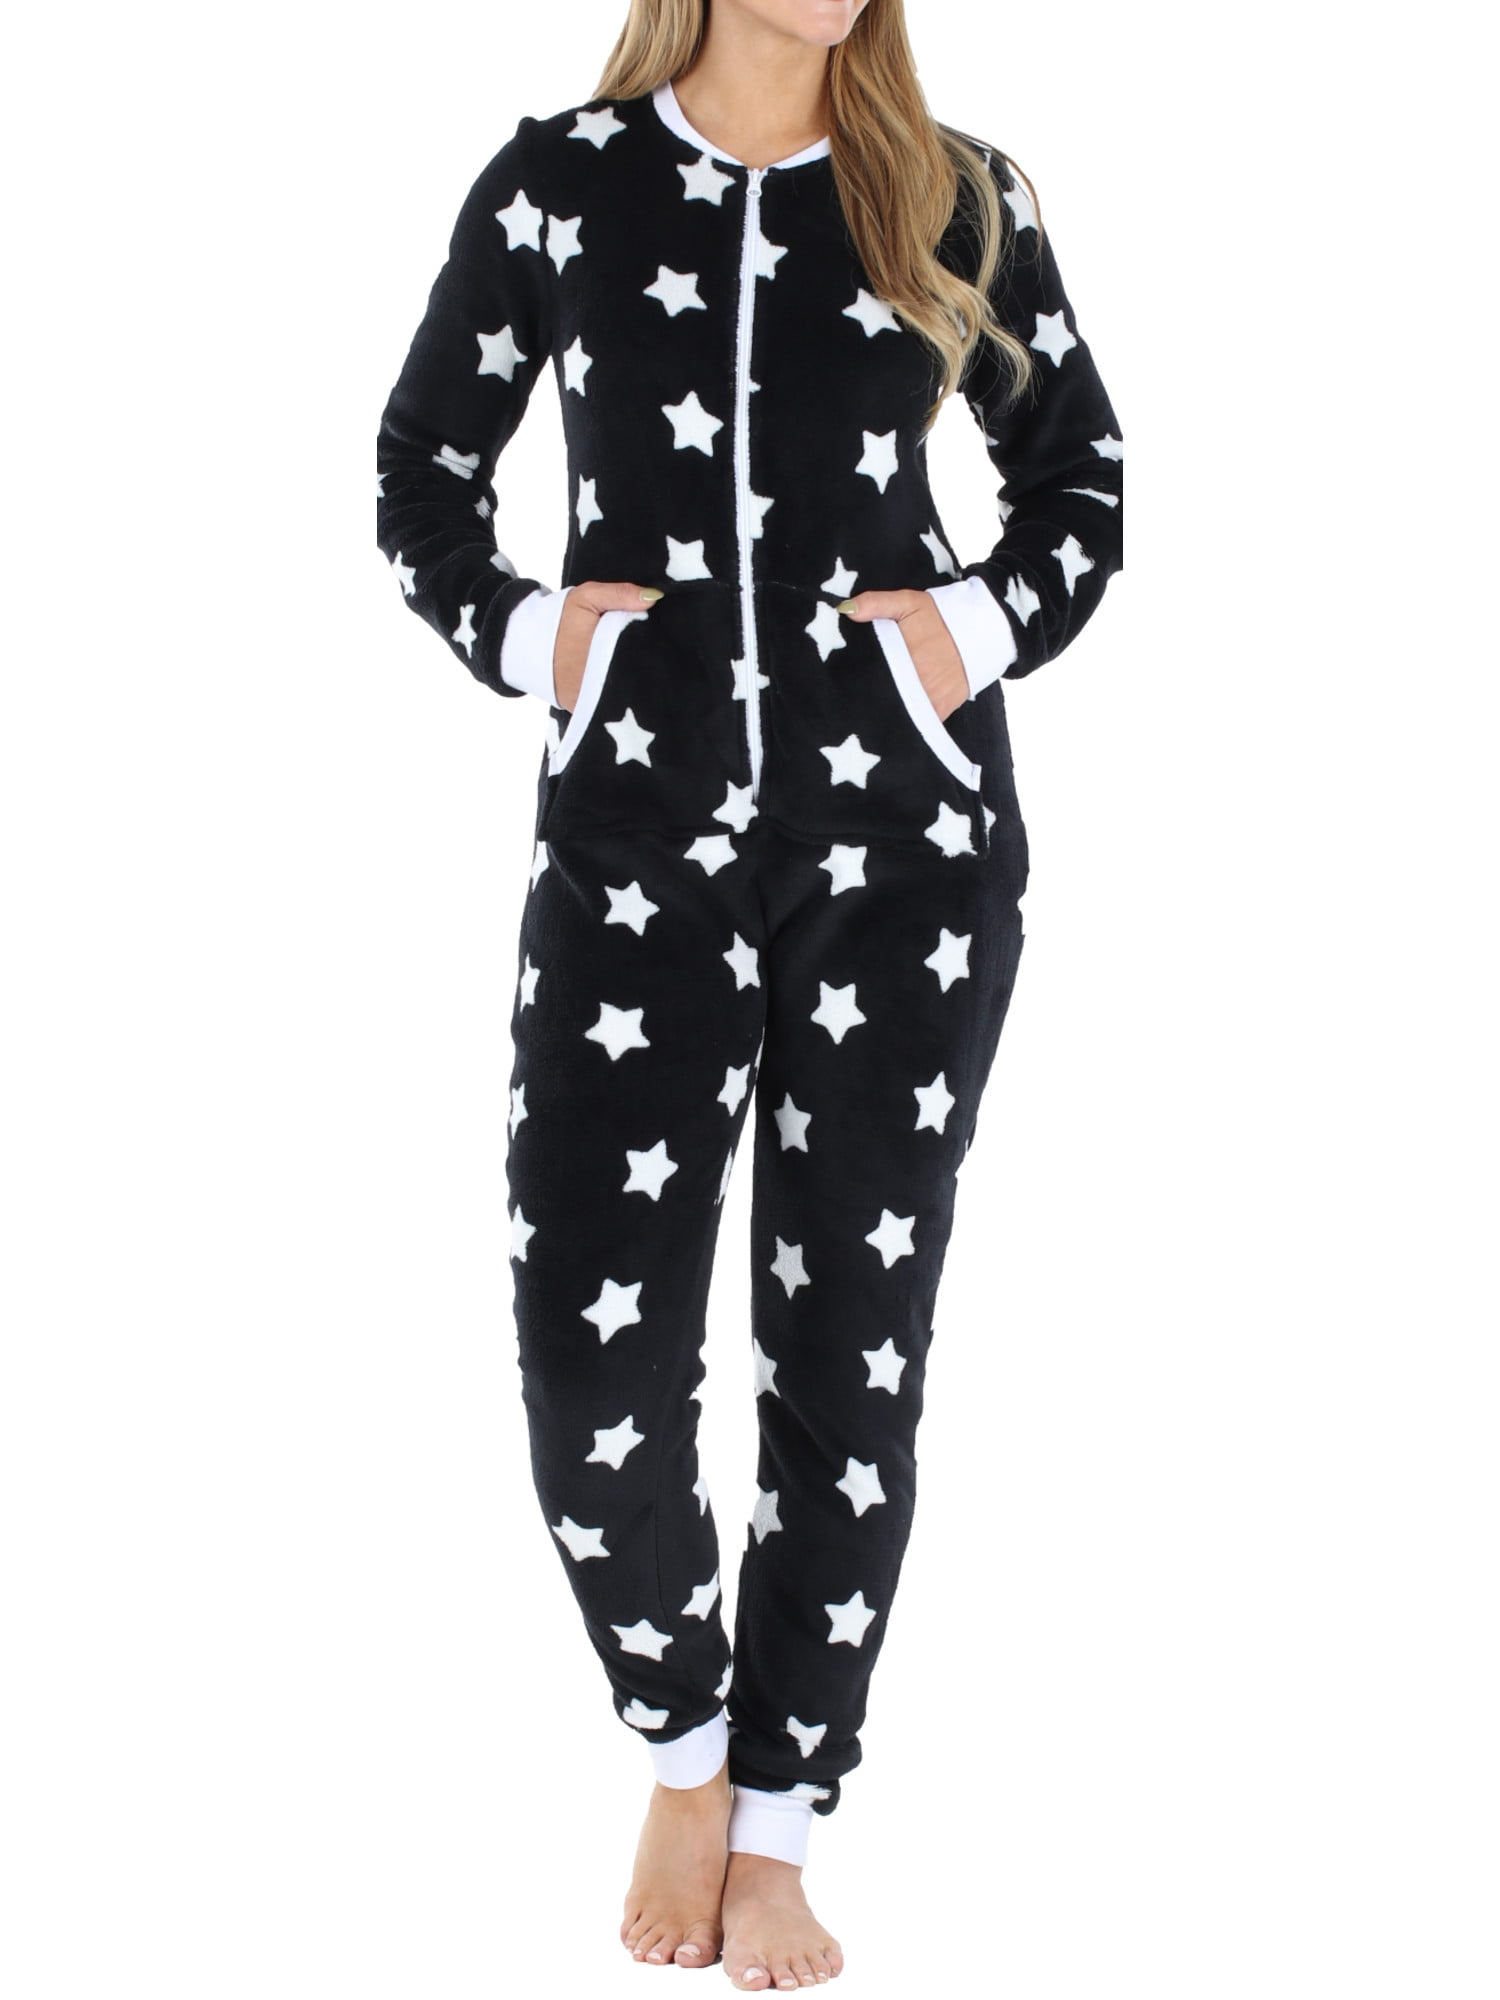 JSPOYOU Matching Family Christmas Pajamas Sets Funny Cute Cartoon Elk Printed Onesie Hooded Jumpsuit One Piece Sleepwear Set